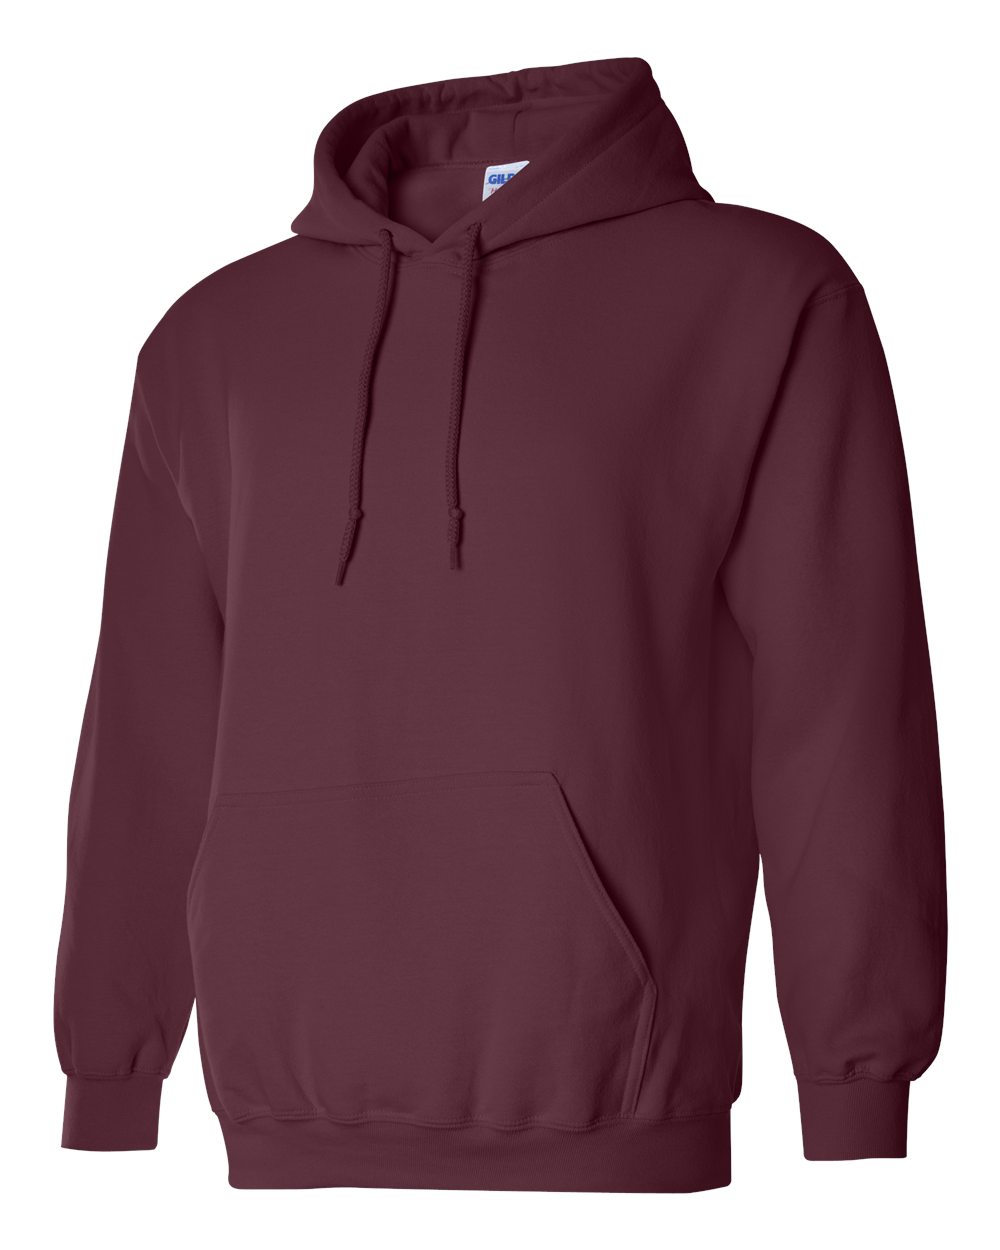 Adult Hooded Sweatshirt (Unisex) | T-Shirt Time